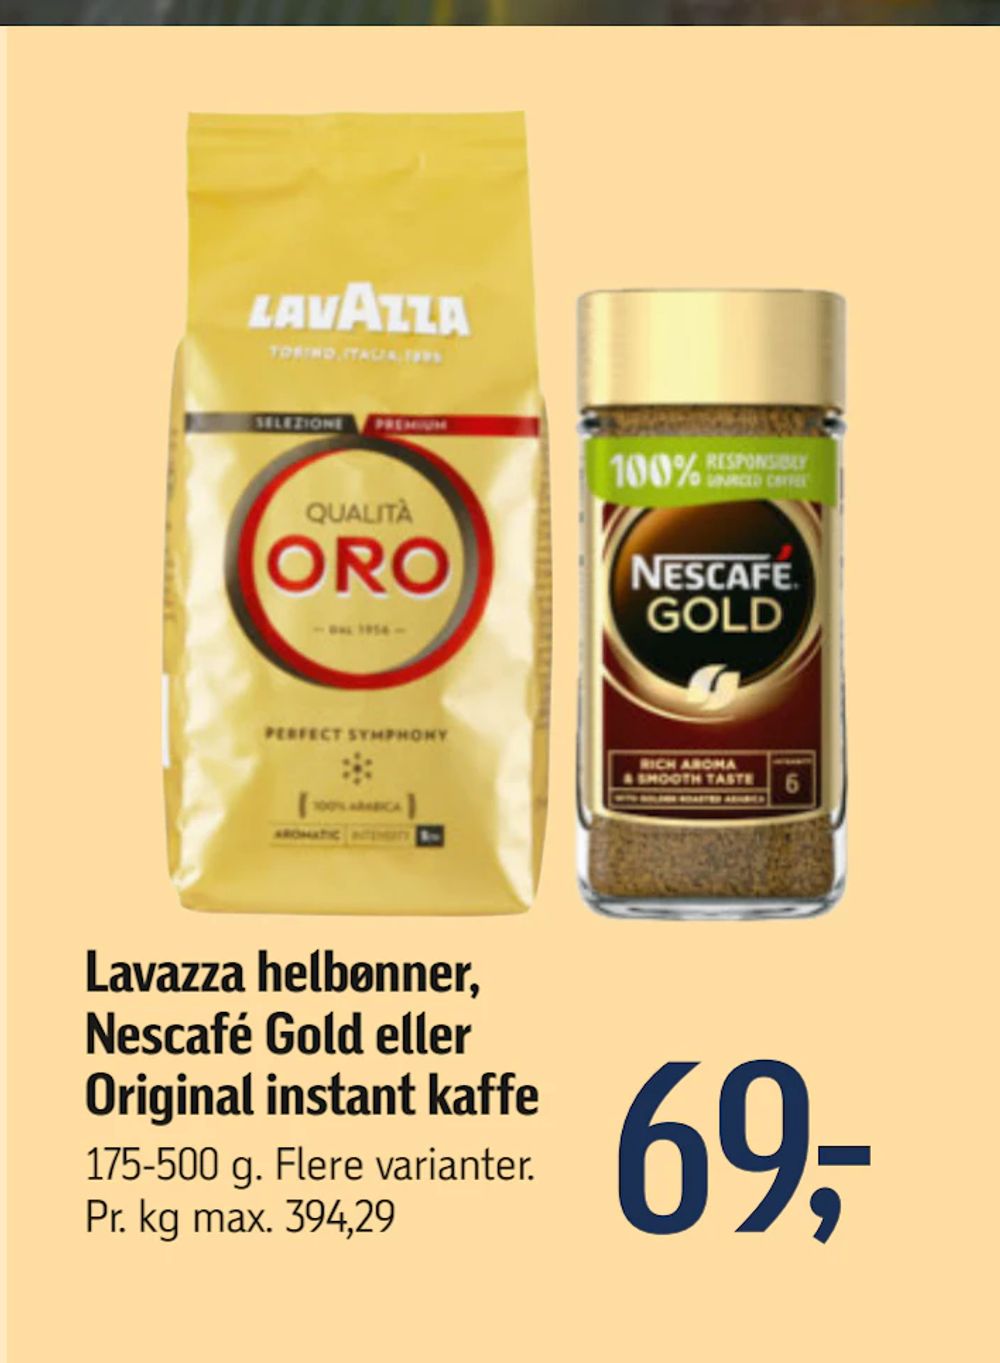 Tilbud på Lavazza helbønner, Nescafé Gold eller Original instant kaffe fra føtex til 69 kr.